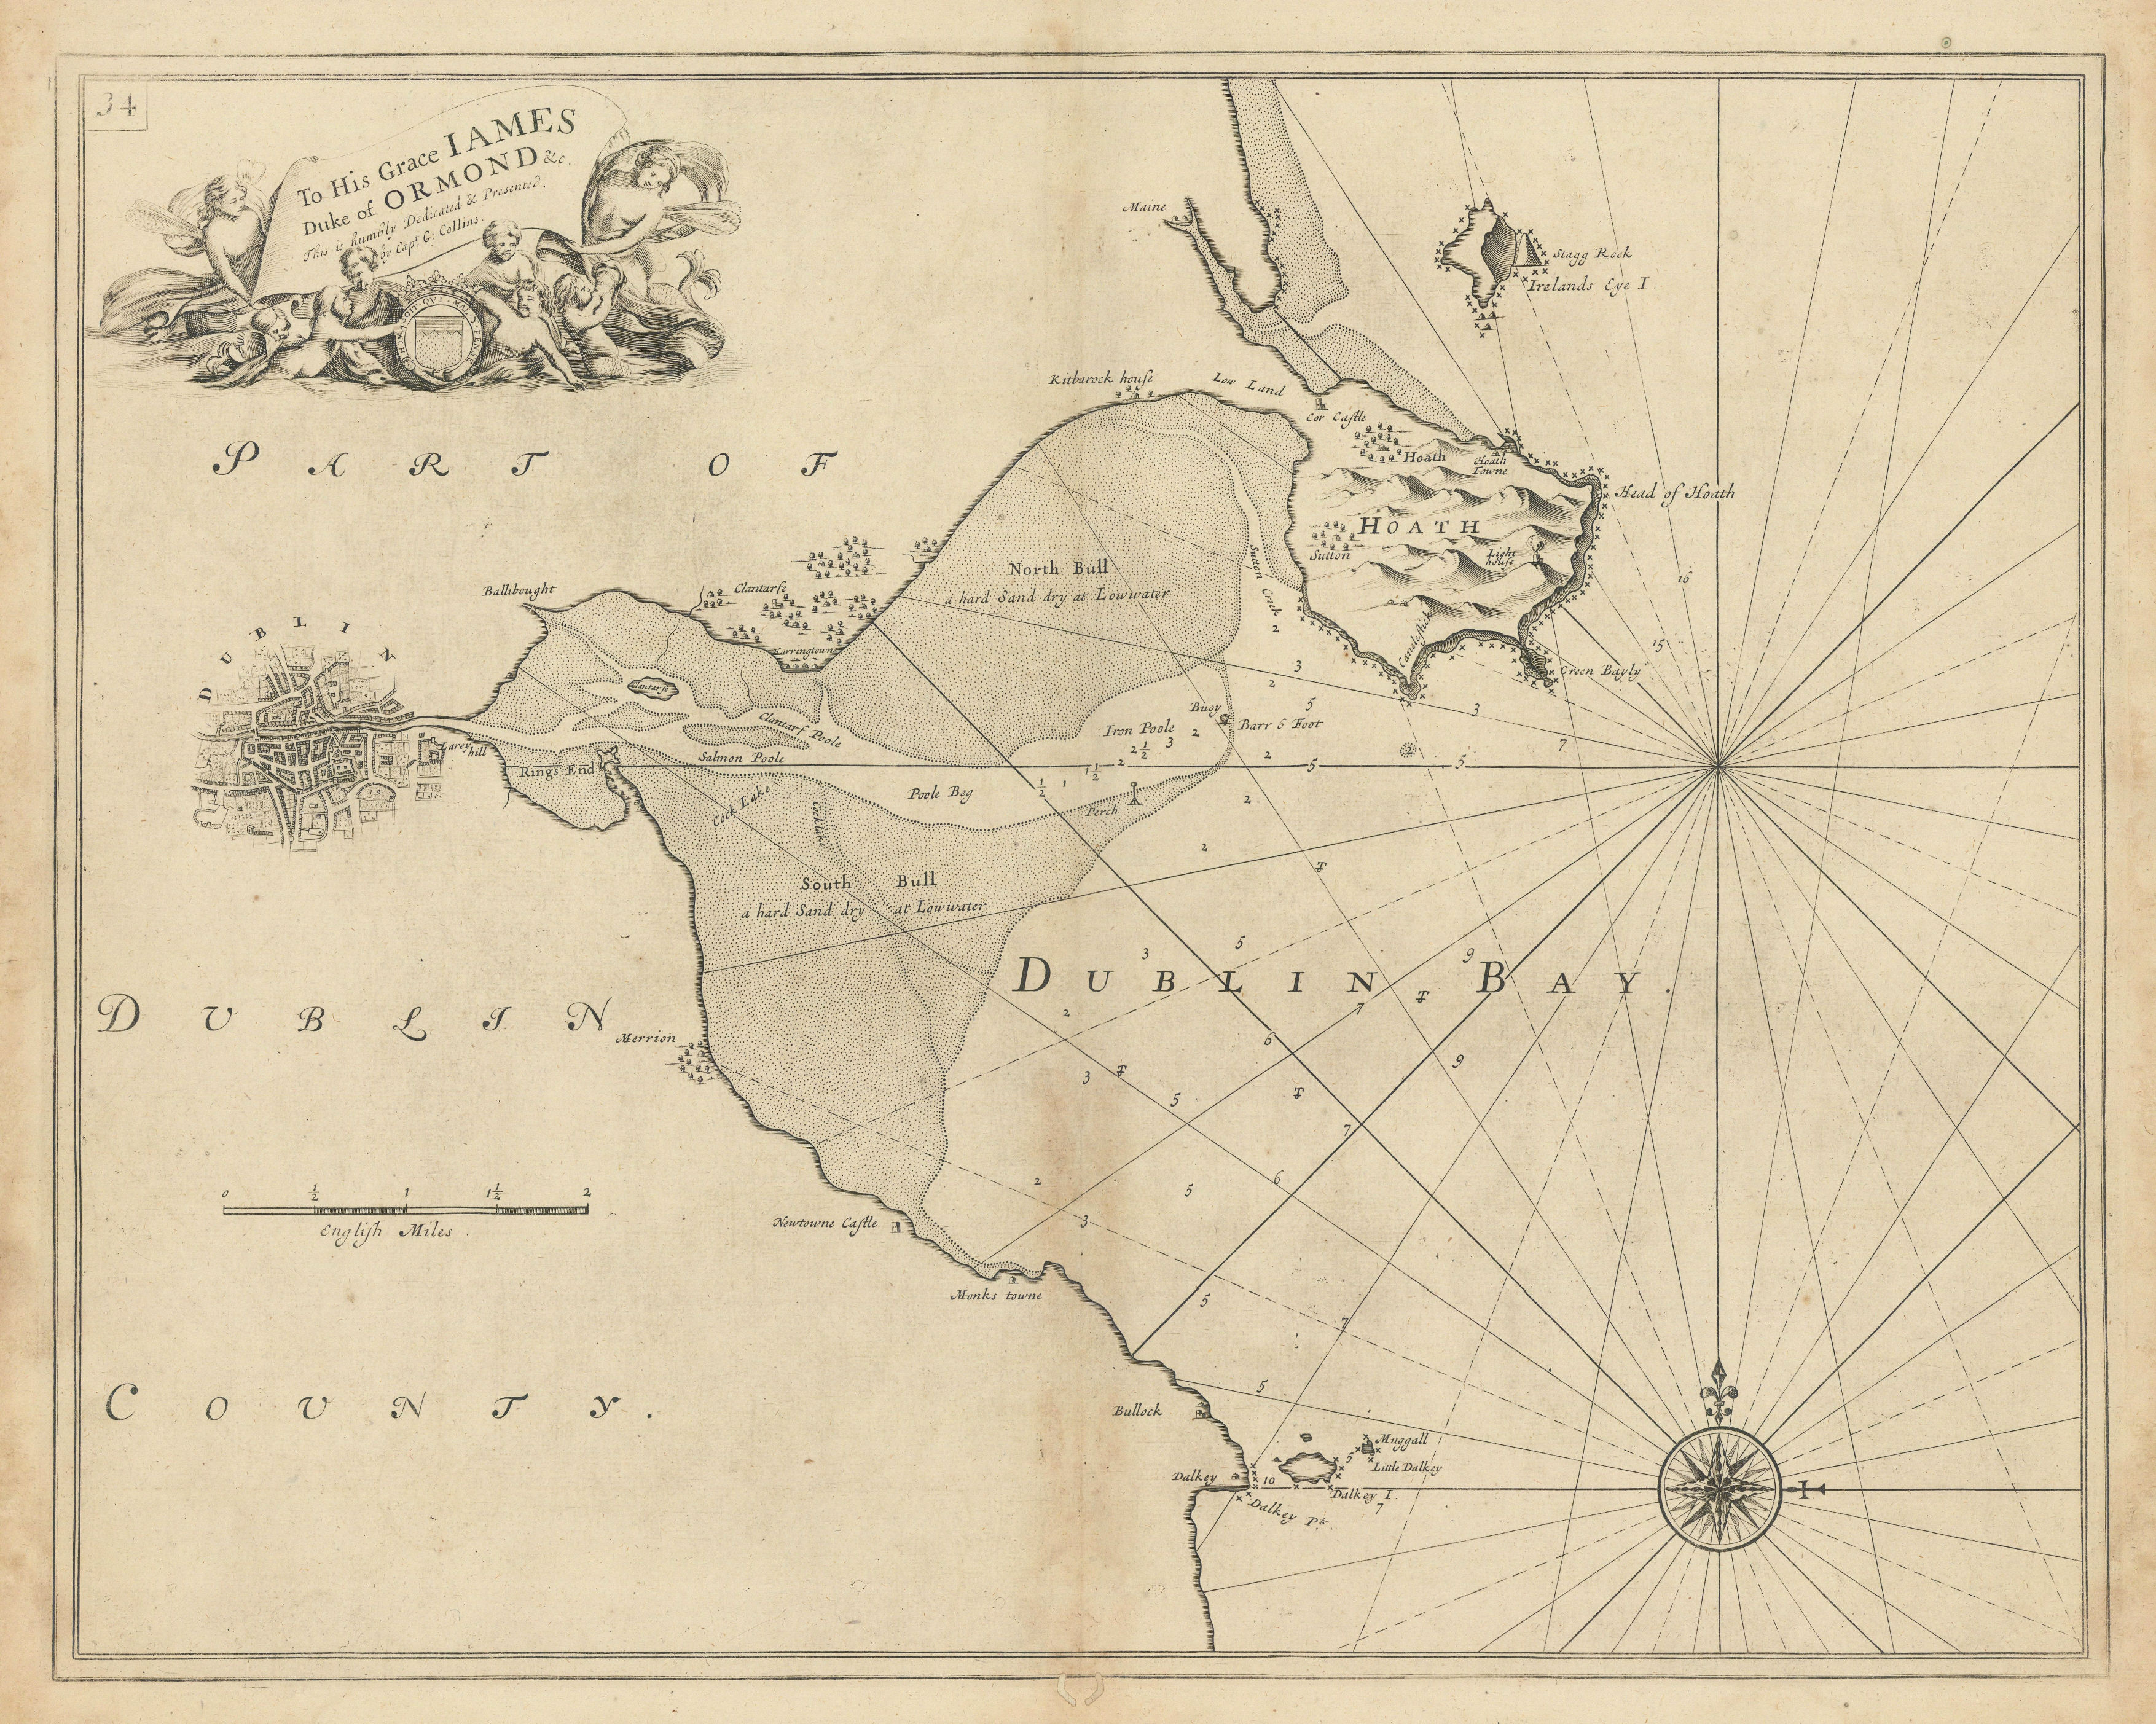 Associate Product DUBLIN BAY sea chart. Howth Head Dalkey Clontarf Merrion. COLLINS 1723 old map